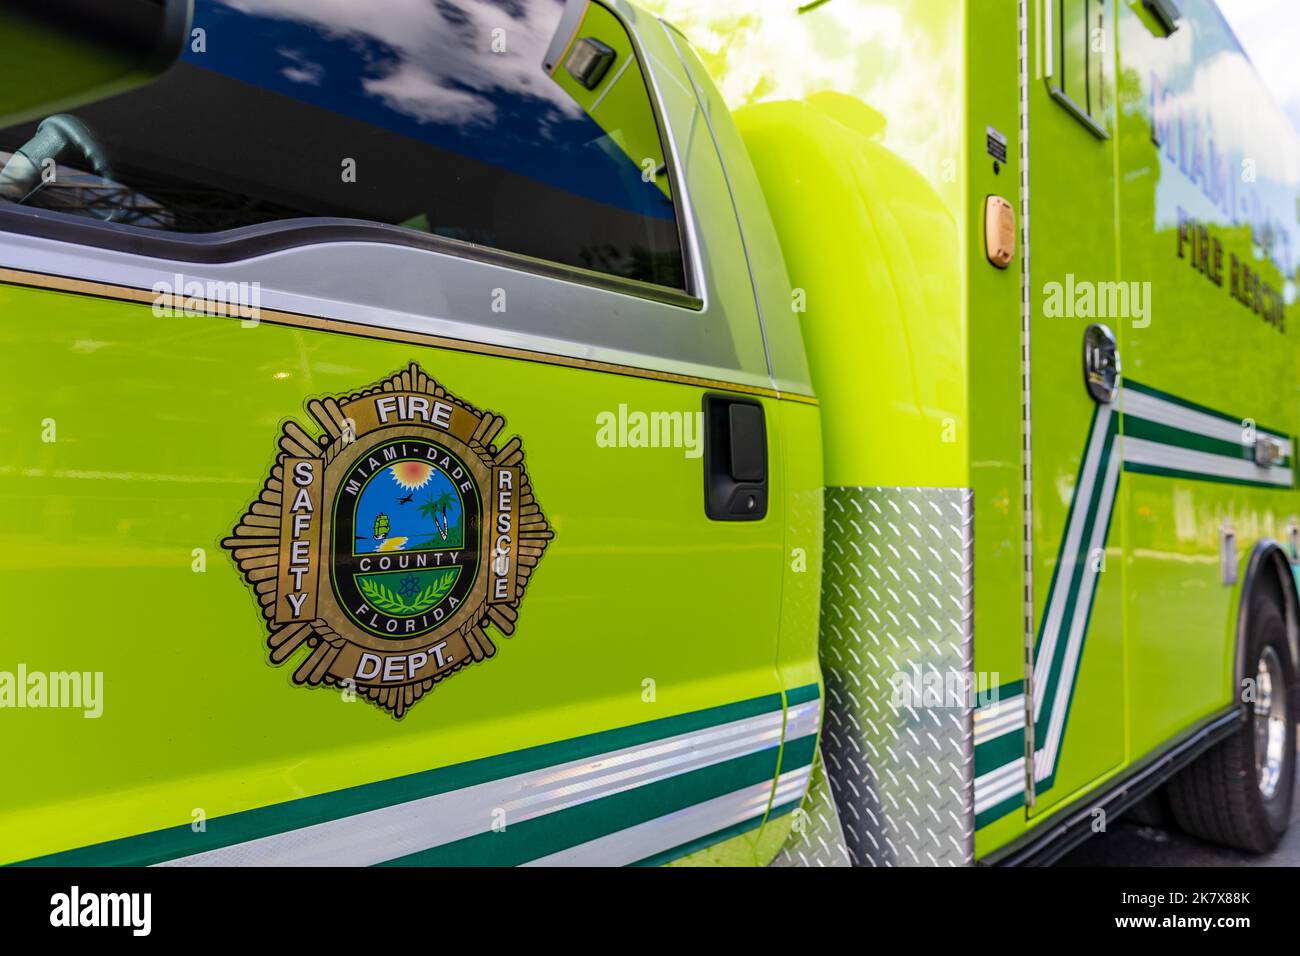 Jardins de Miami, FL - 7 octobre 2022 : véhicule de sauvetage d'incendie de Miami-Dade Banque D'Images